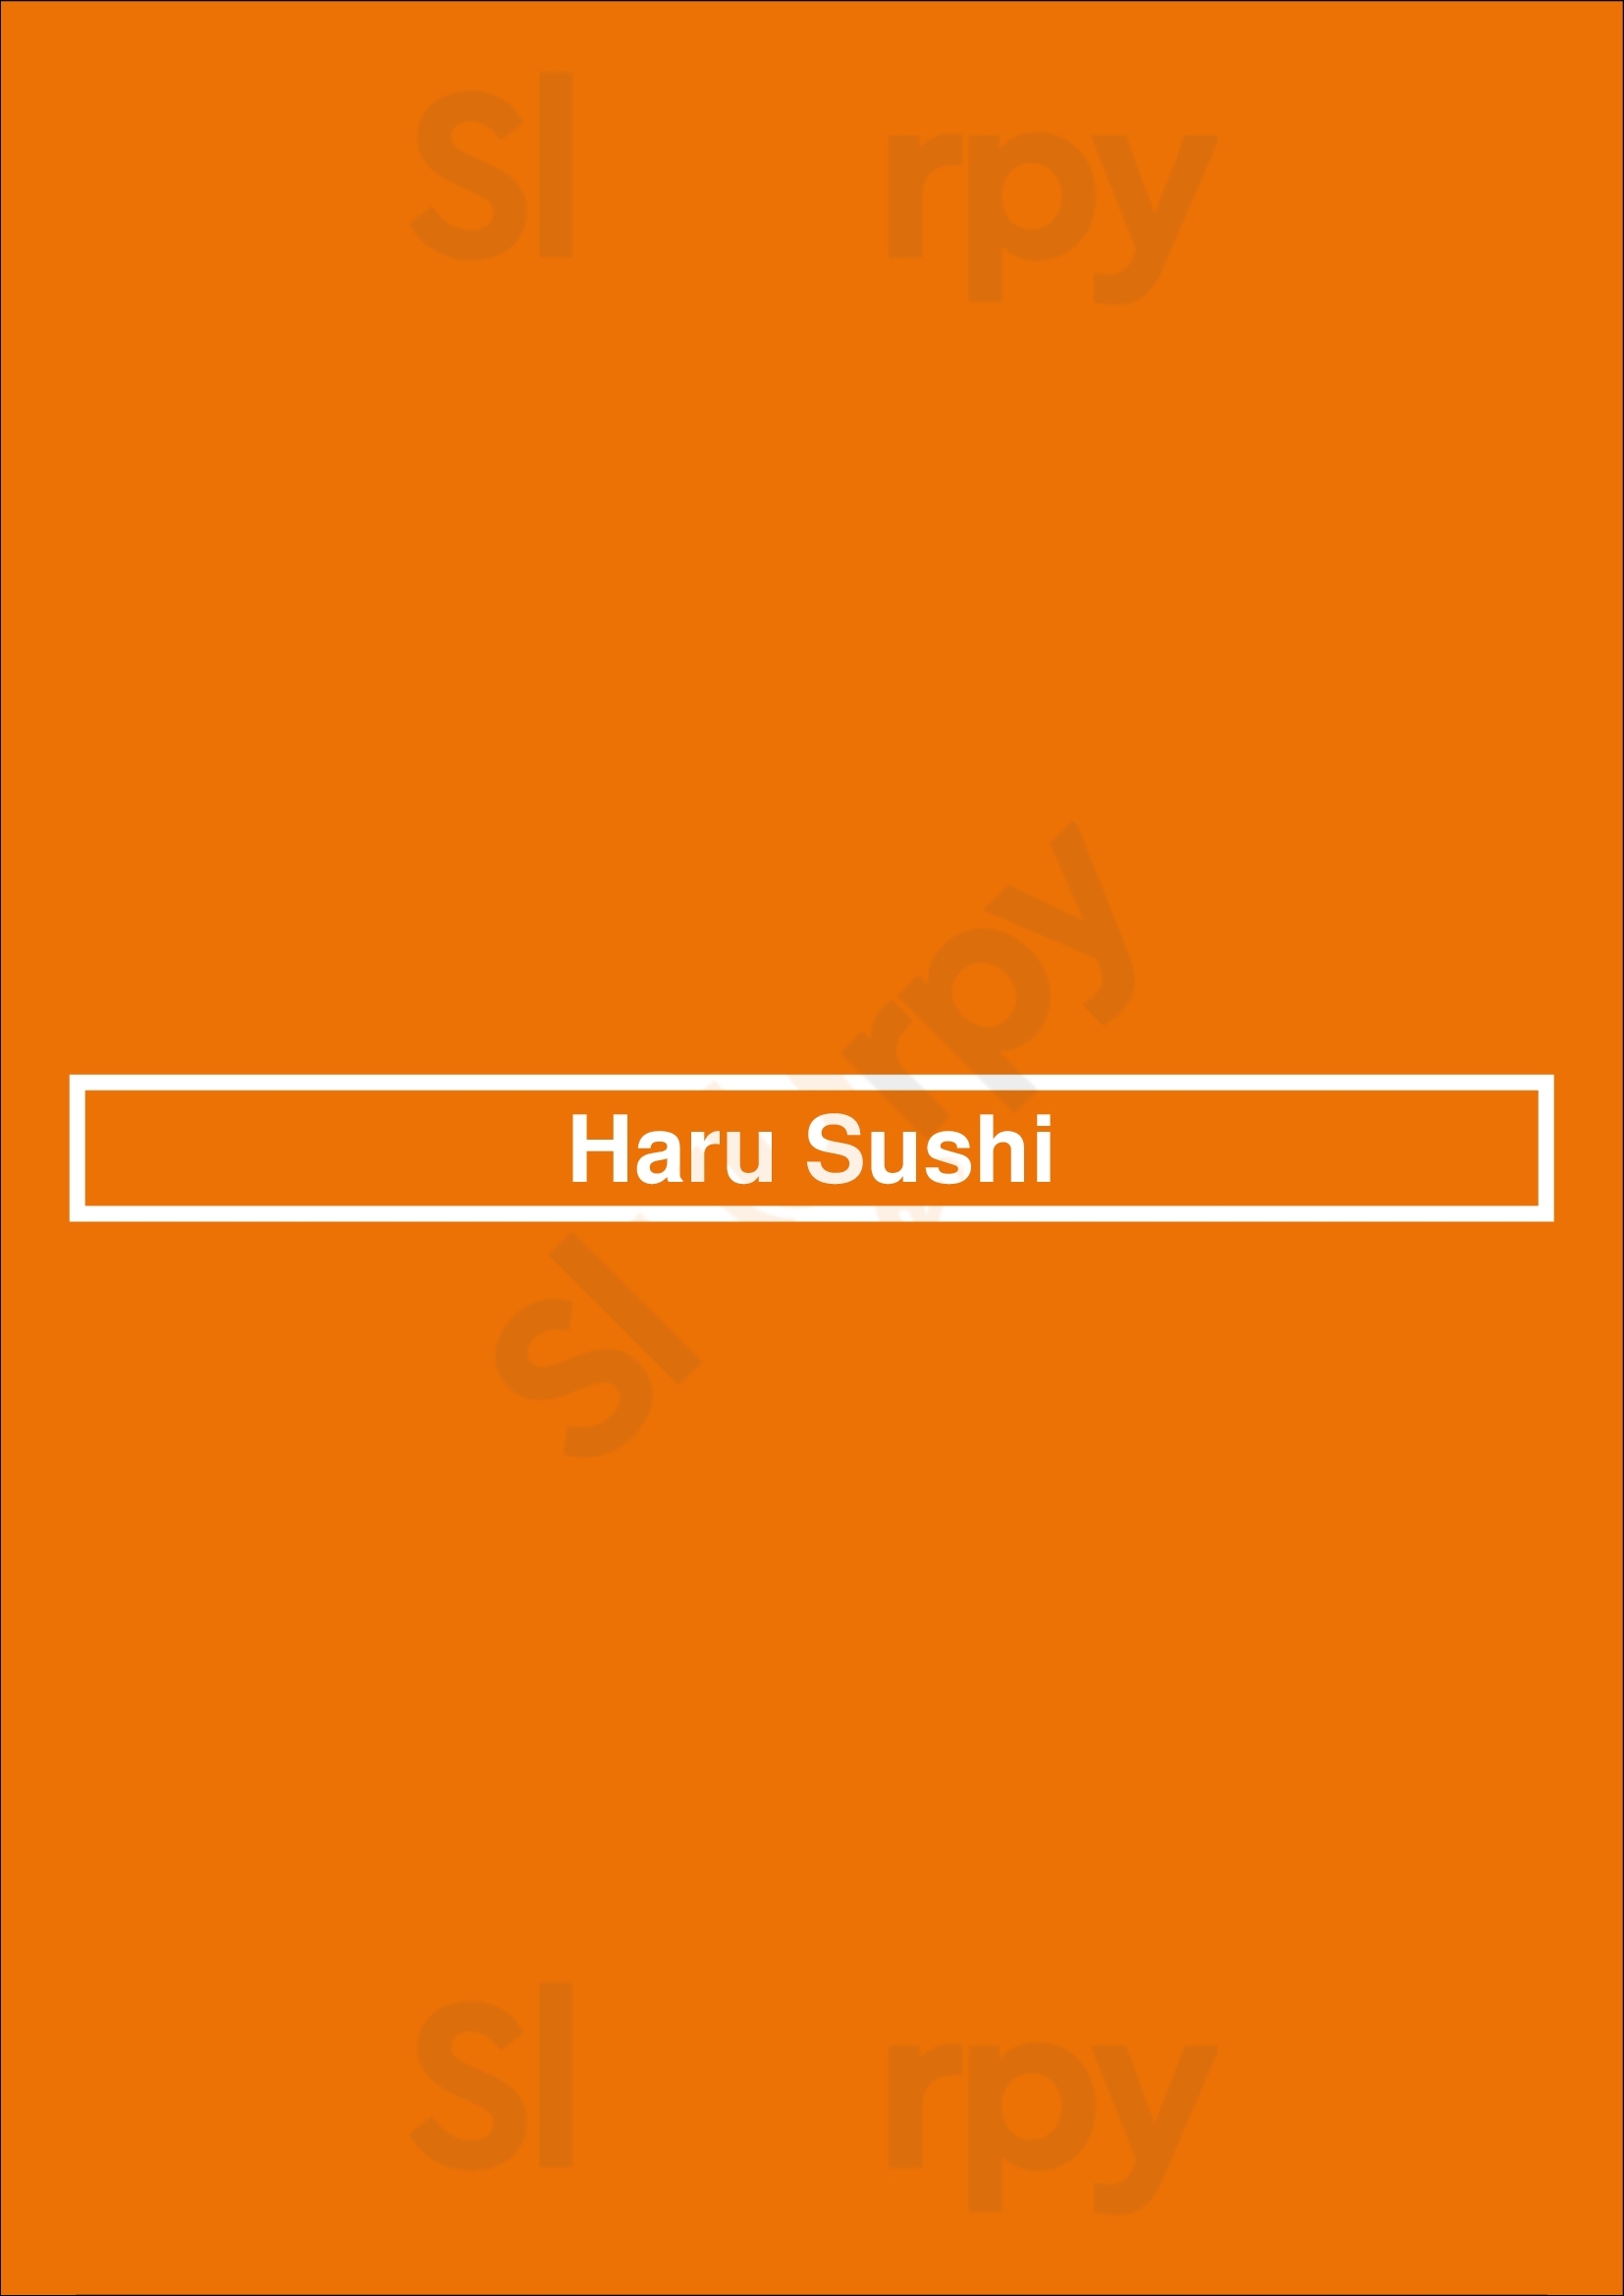 Haru Sushi La Jolla Menu - 1